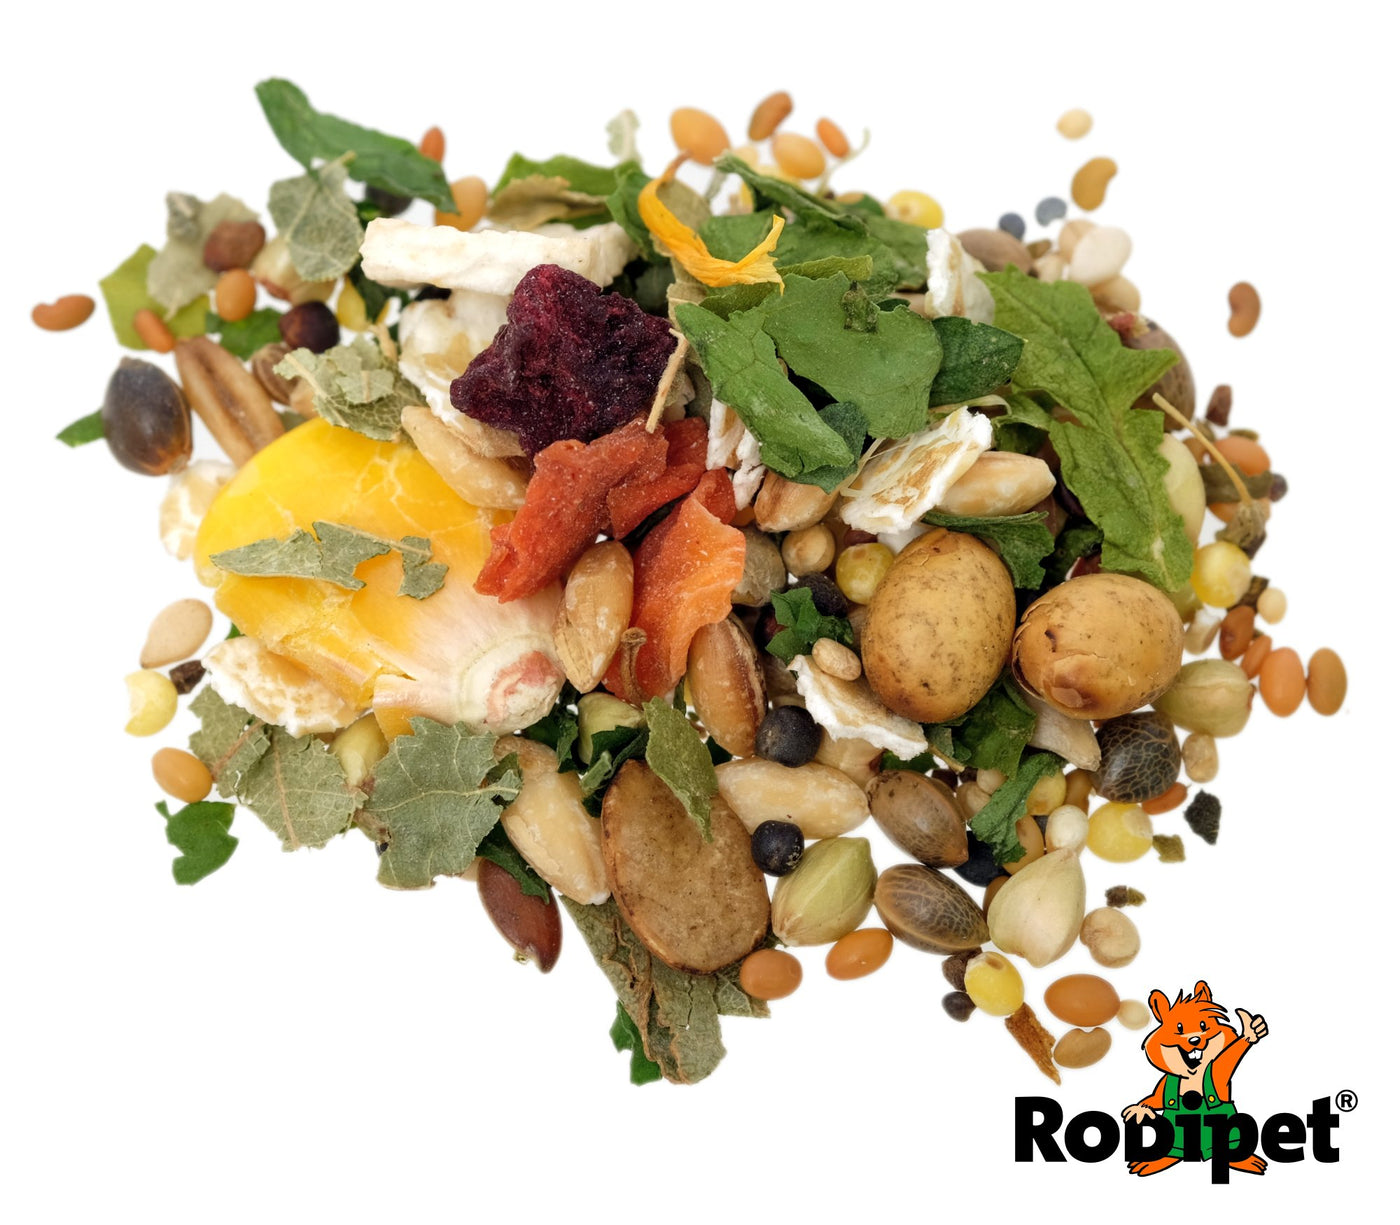 Rodipet - Organic Dwarf Hamster Food ''SENiOR'' - 500g